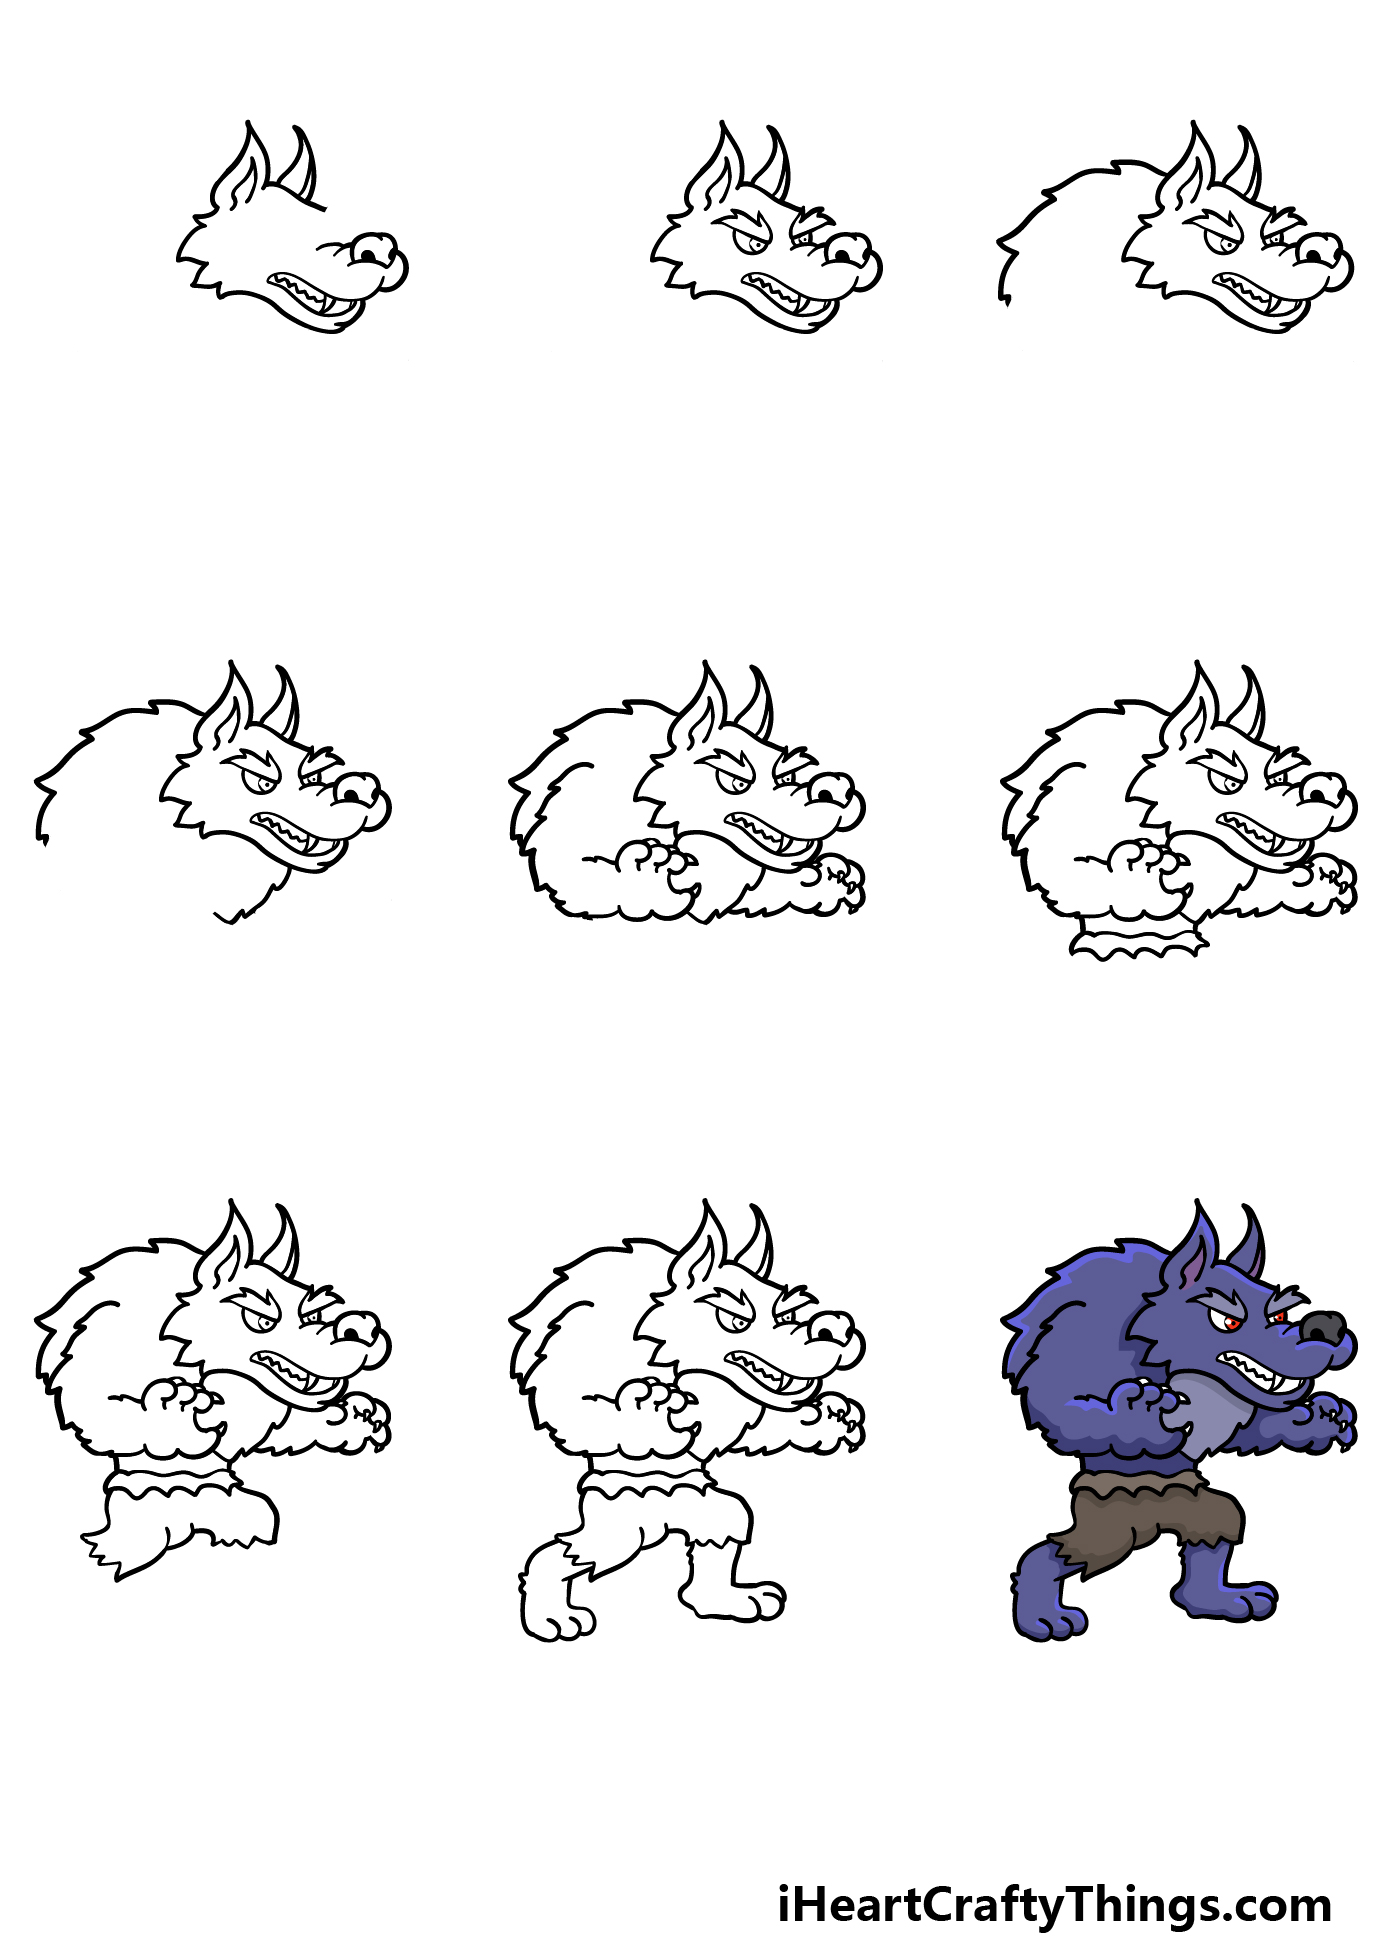 how to draw a cartoon werewolf in 9 steps